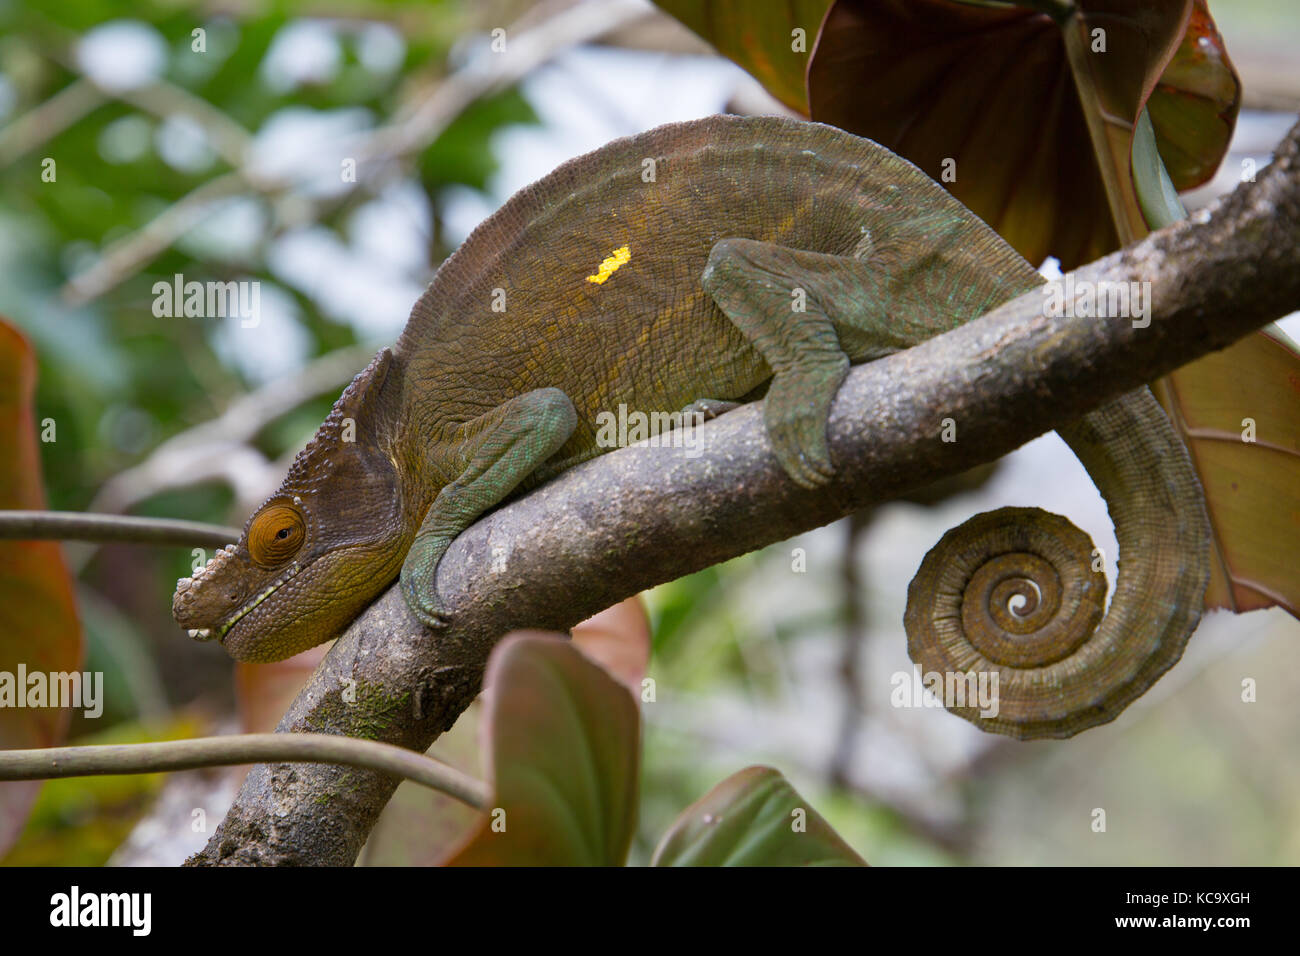 Chameleon ruht auf Ast, Madagaskar, 2017 Stockfoto